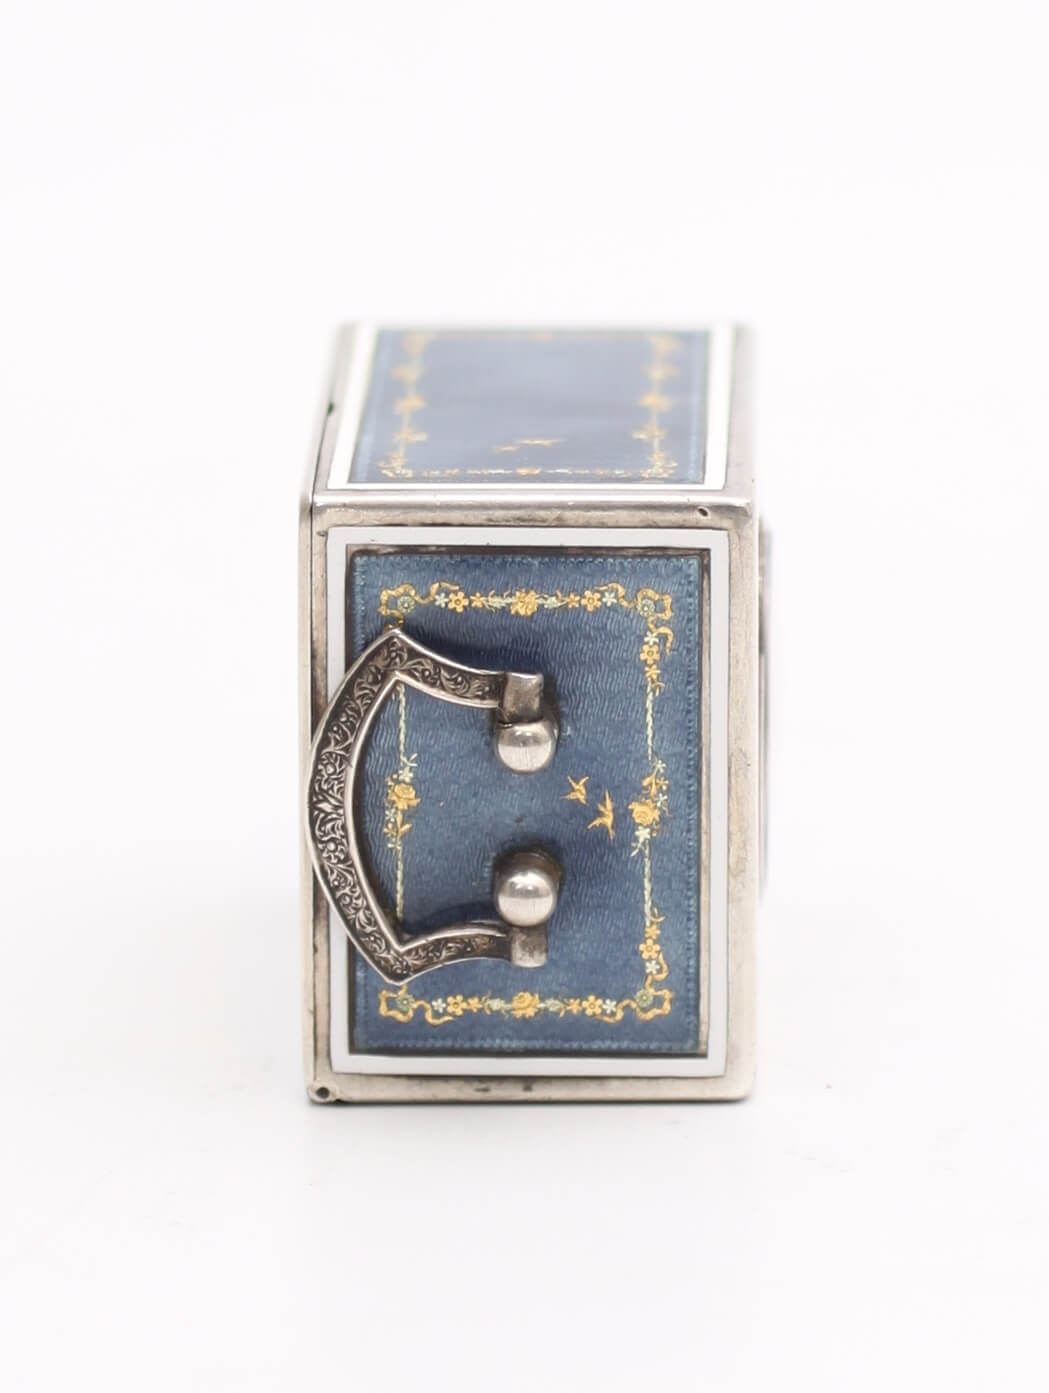 Swiss guilloche translucent enamel silver miniature travel clock